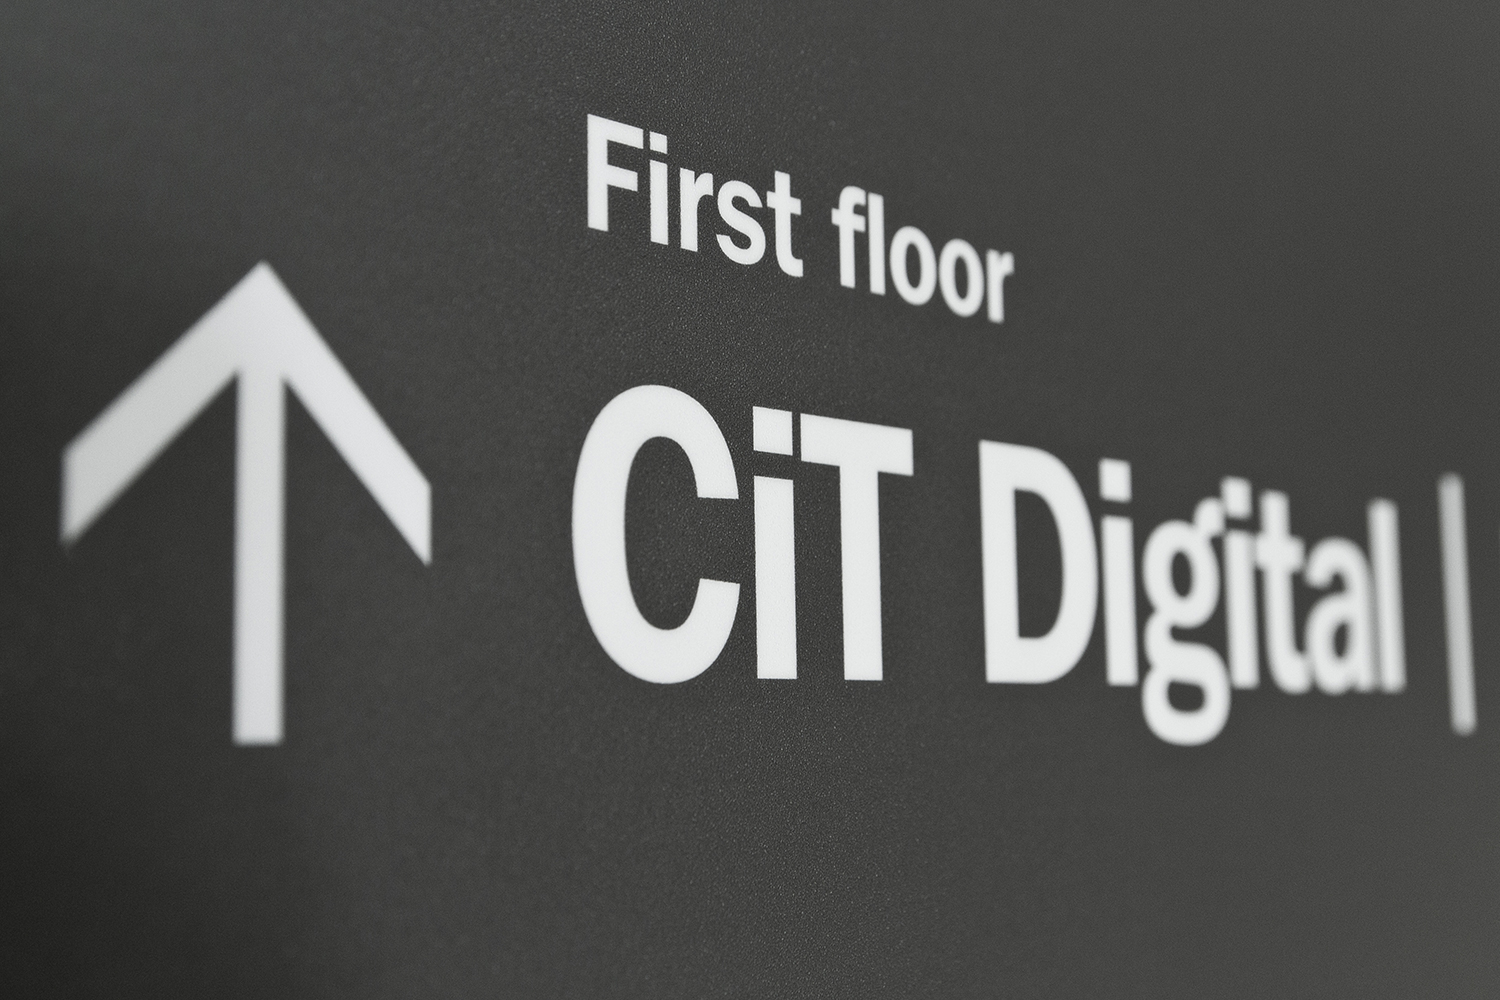 CiT Digital